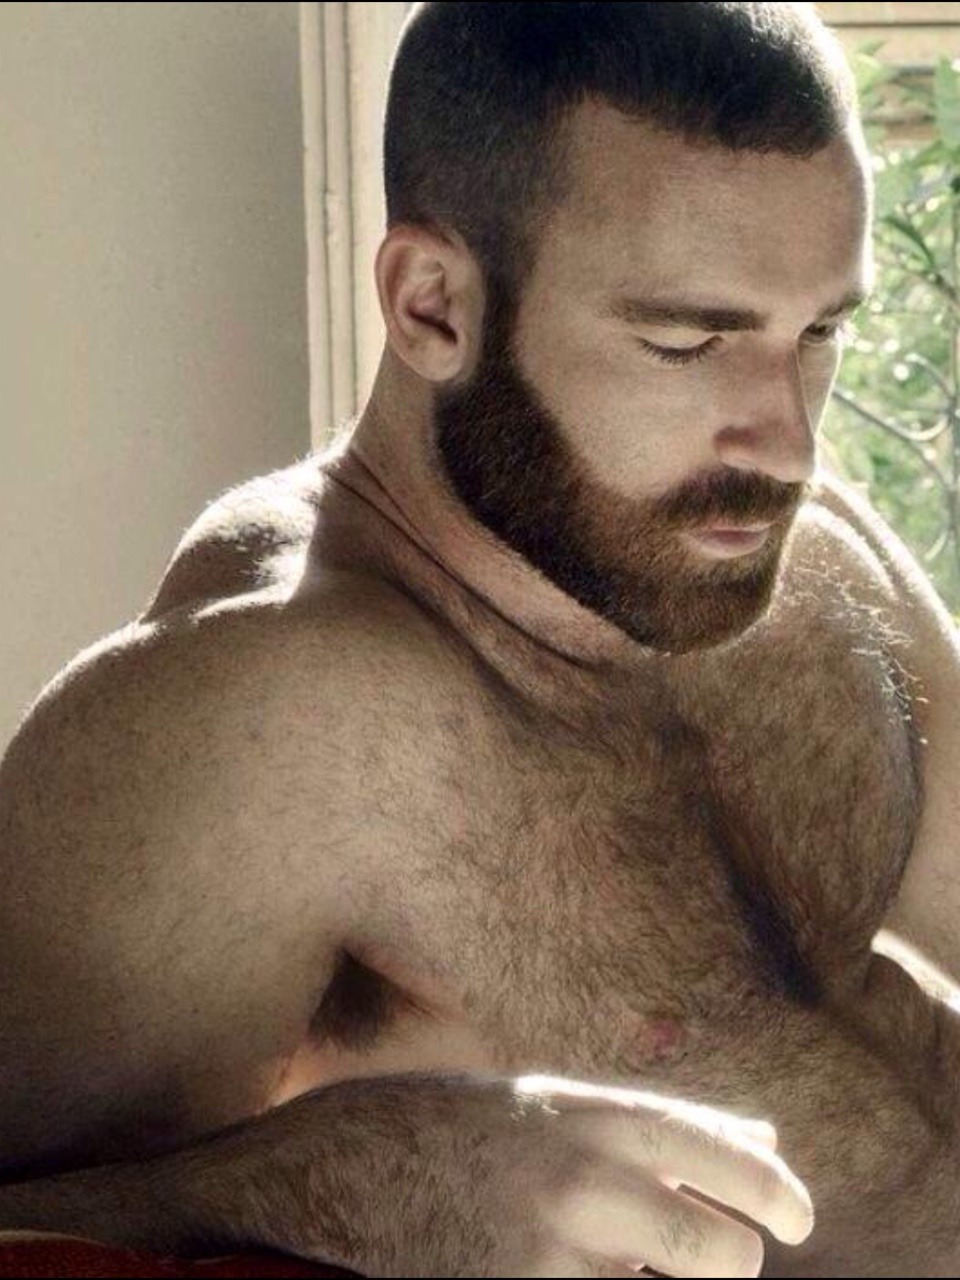 Man with beard hairy chest